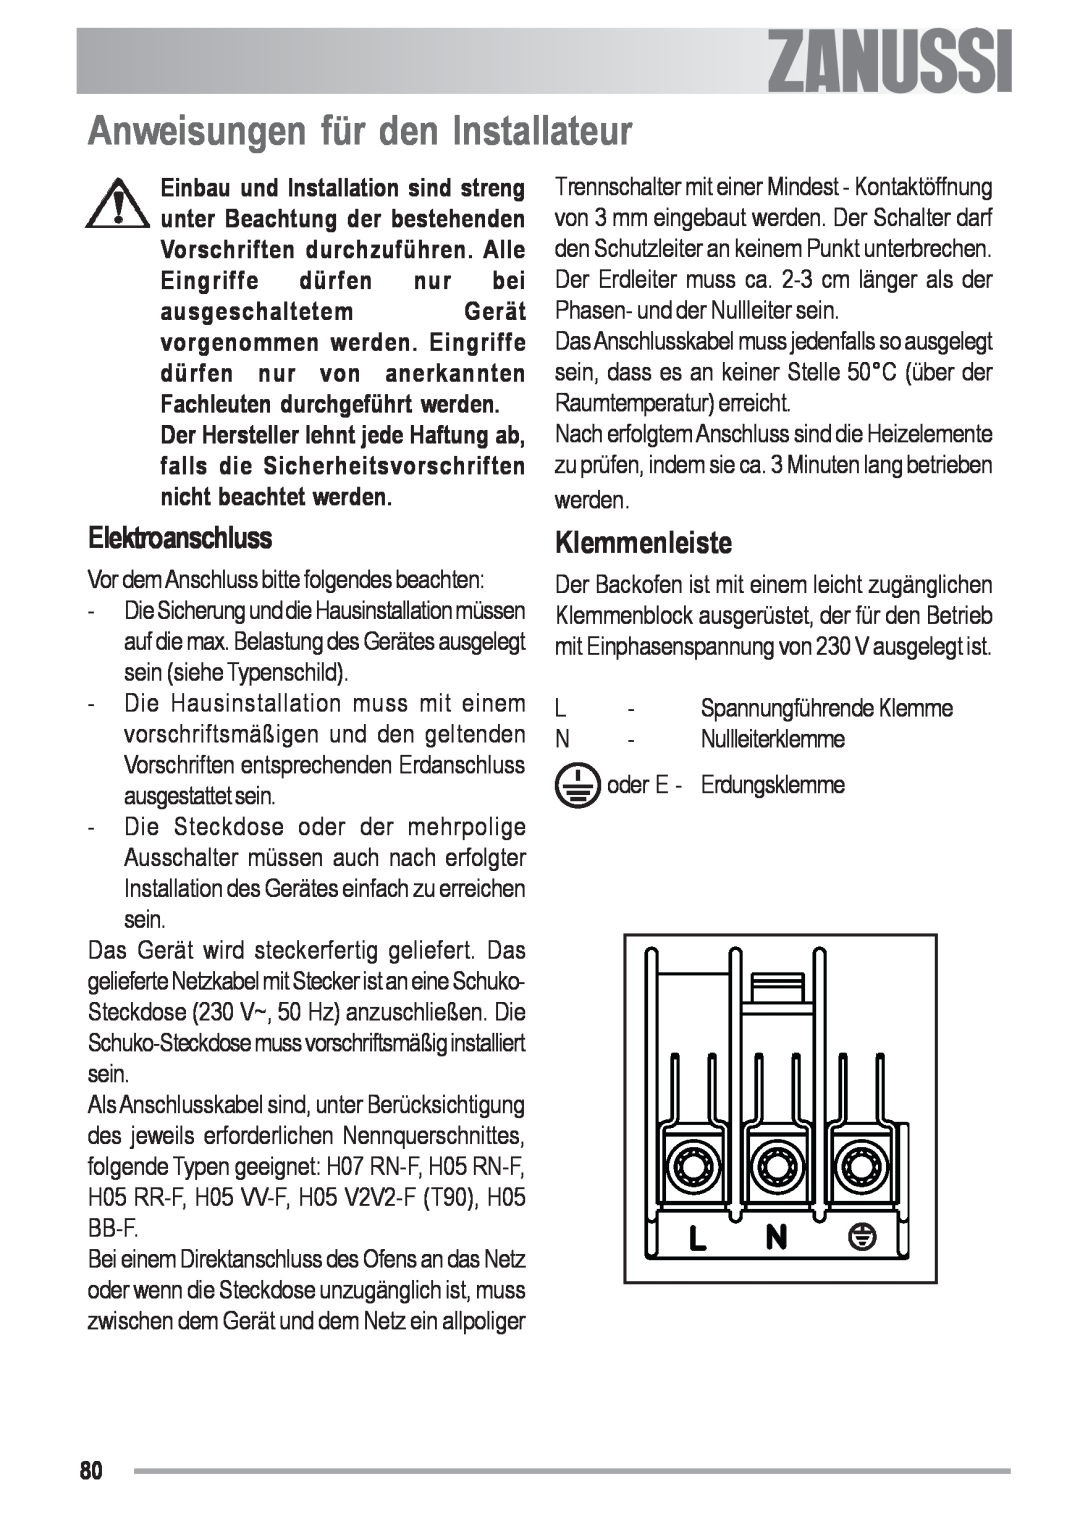 Zanussi ZYB 591 XL, ZYB 590 XL manual Anweisungen für den Installateur, Elektroanschluss, Klemmenleiste, electrolux 